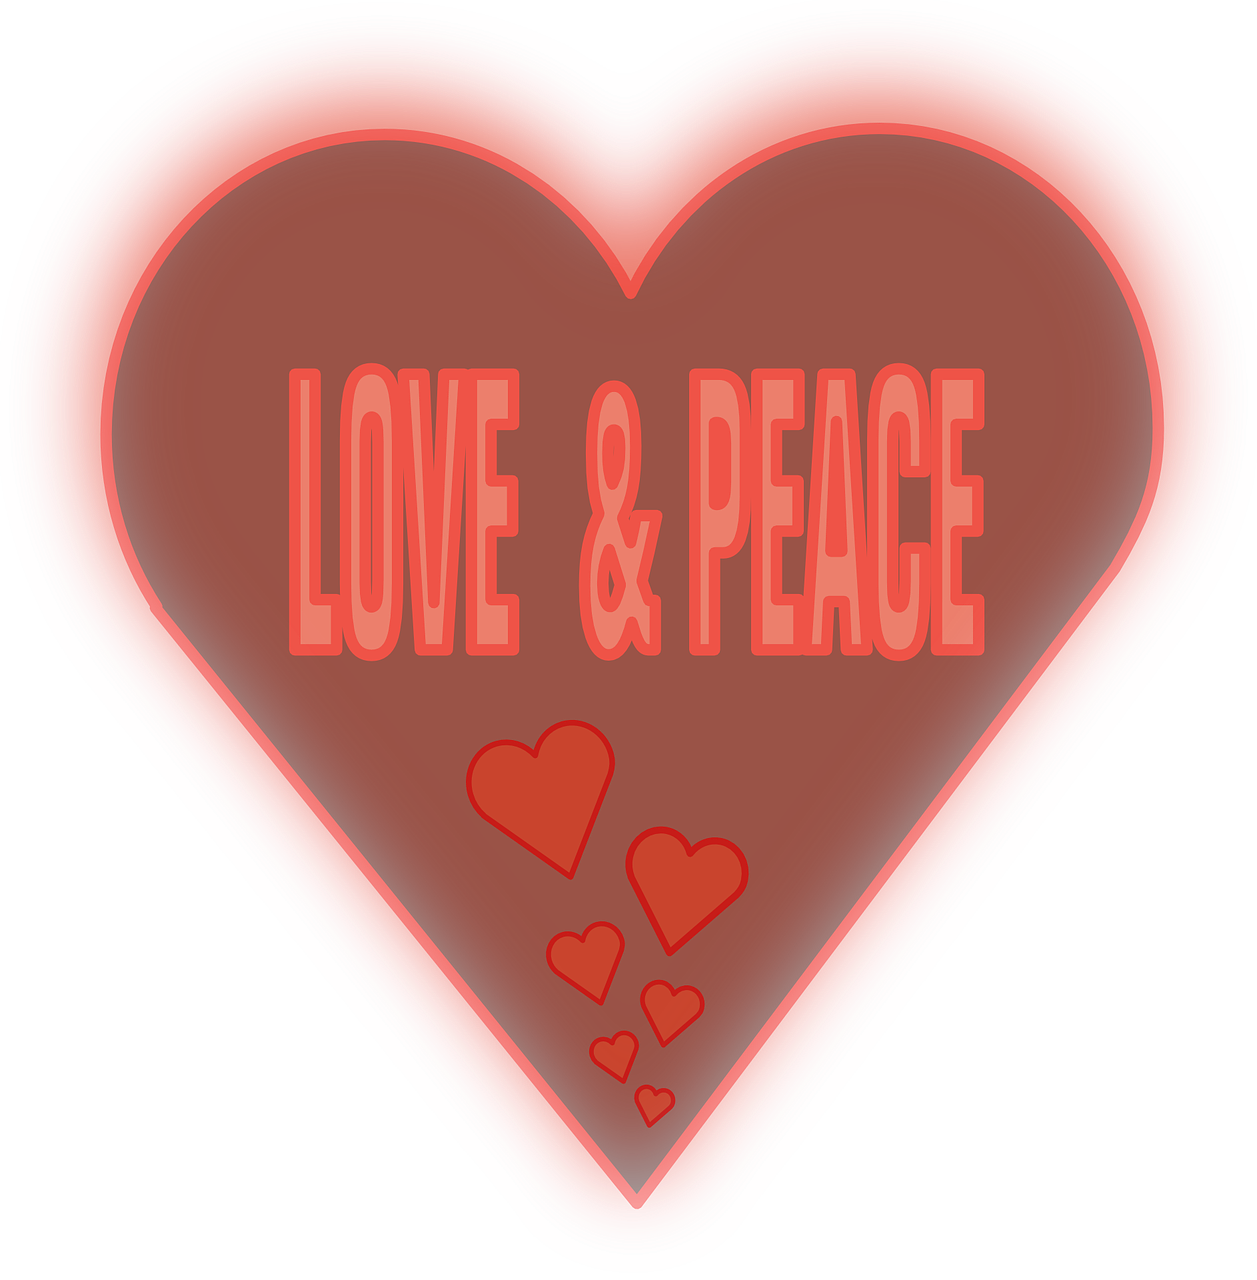 love peace heart free photo